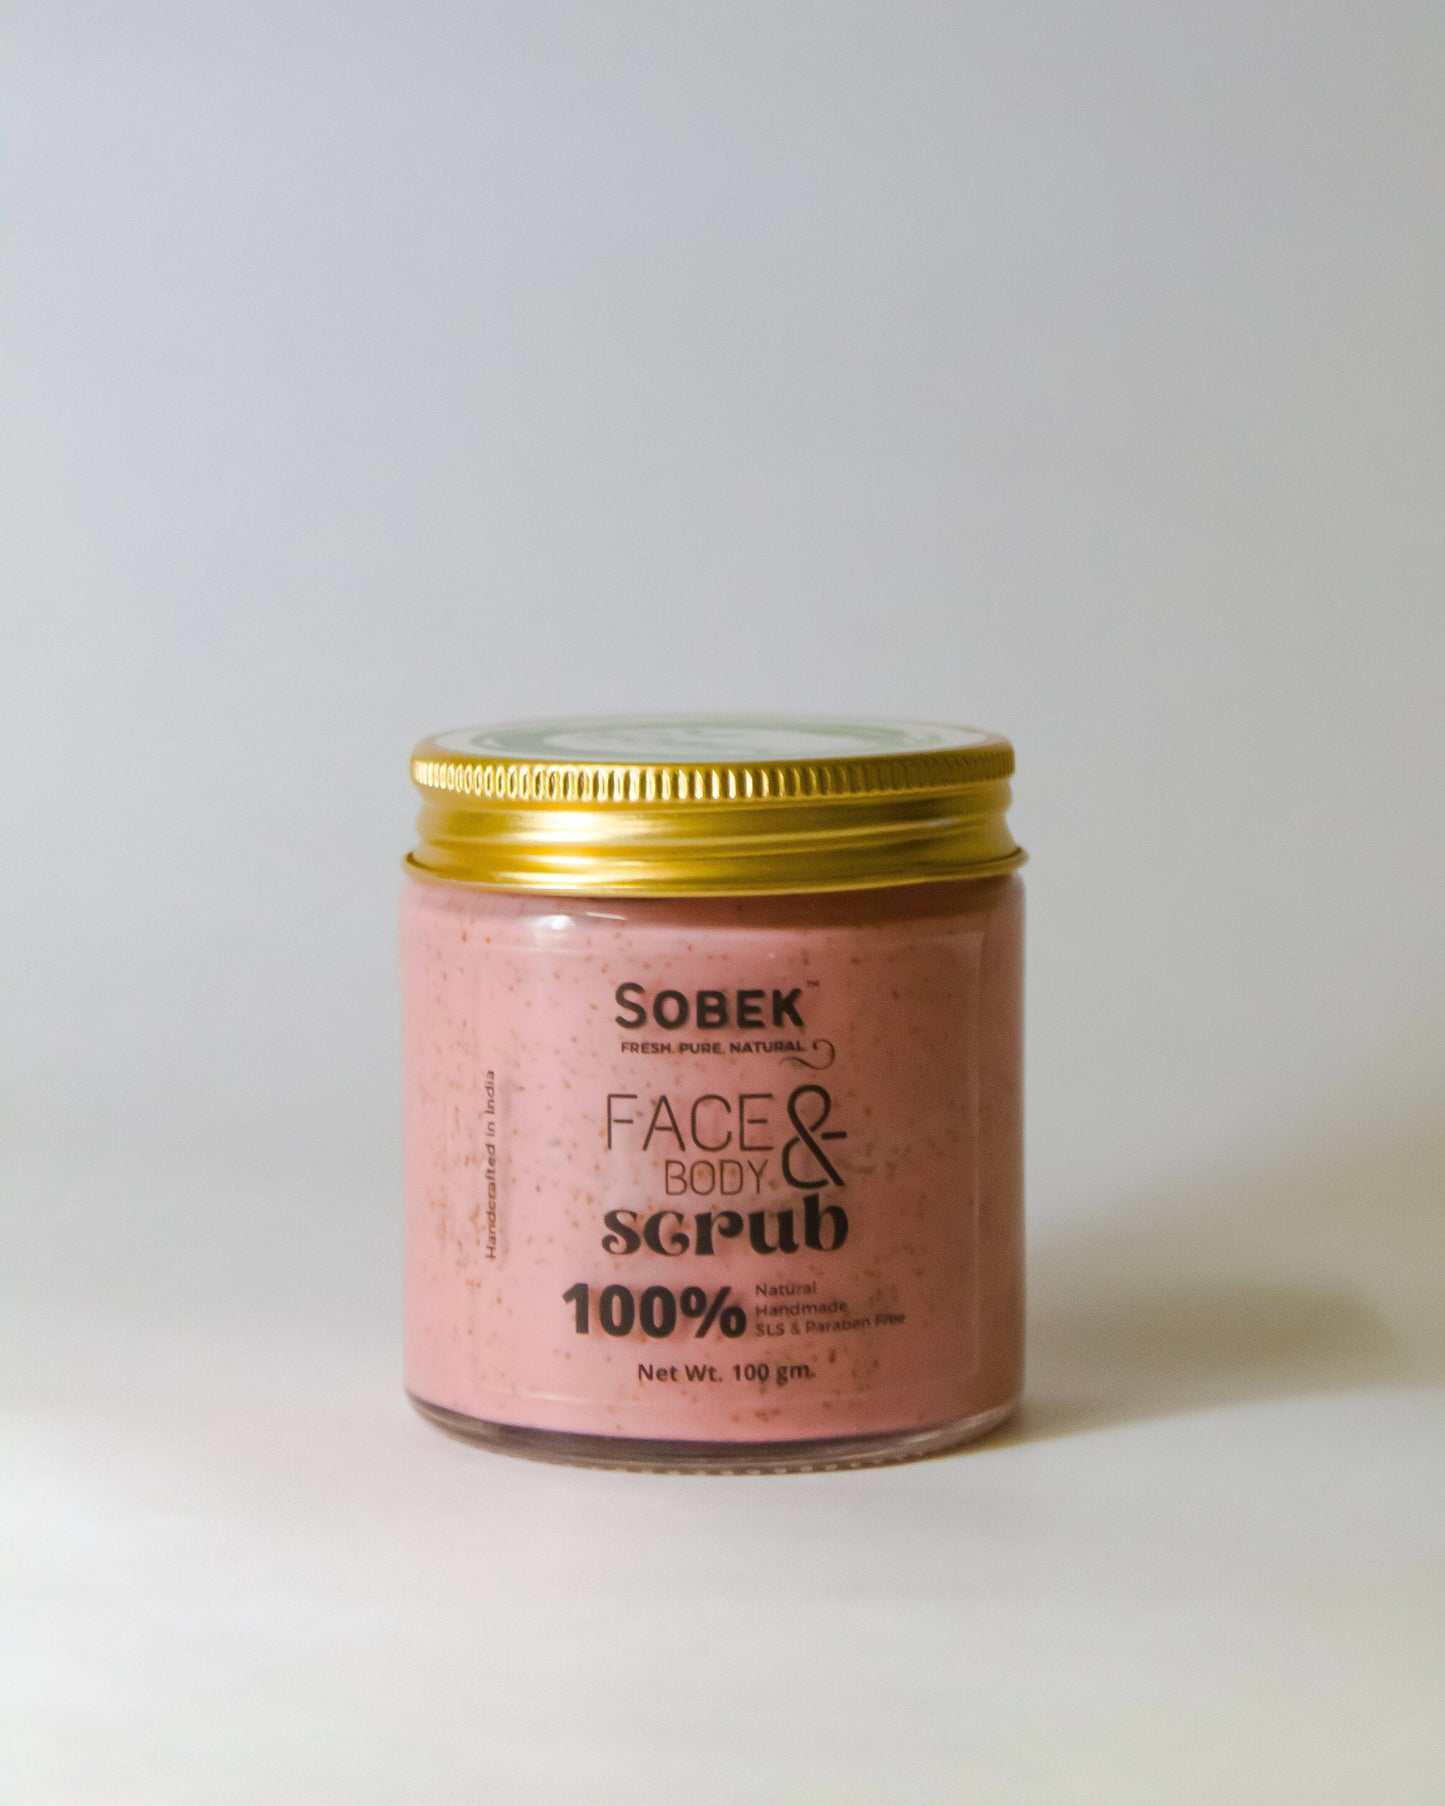 Strawberry tart face and body scrub | Exfoliate, dullness and tan | paraben & SLS free